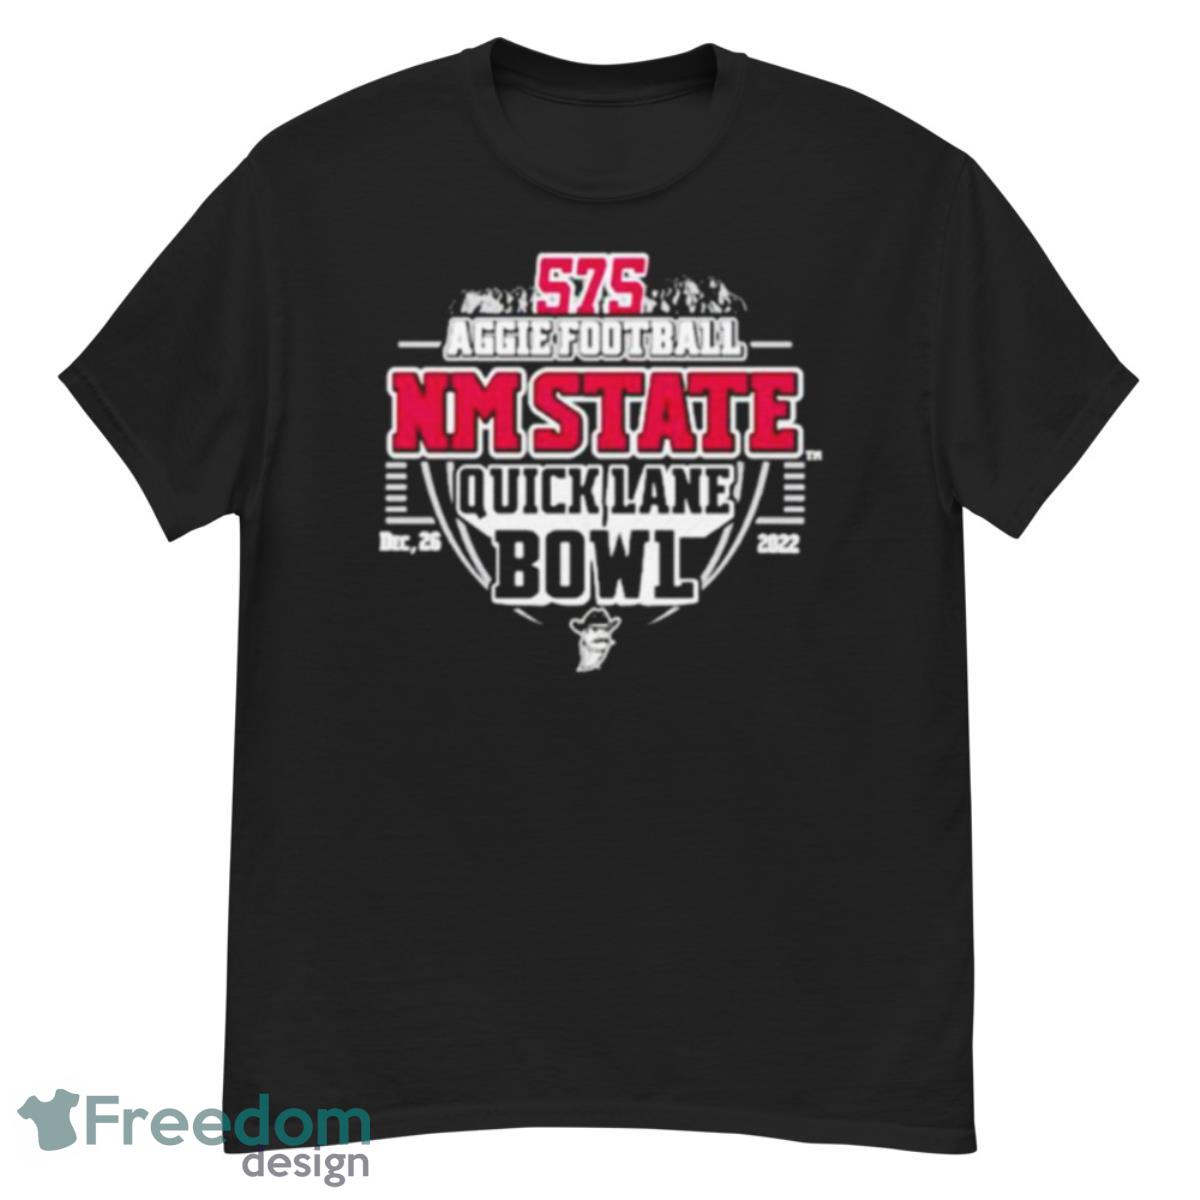 575 Aggies football NM State Quick Lane bowl Dec 2022 shirt - G500 Men’s Classic T-Shirt